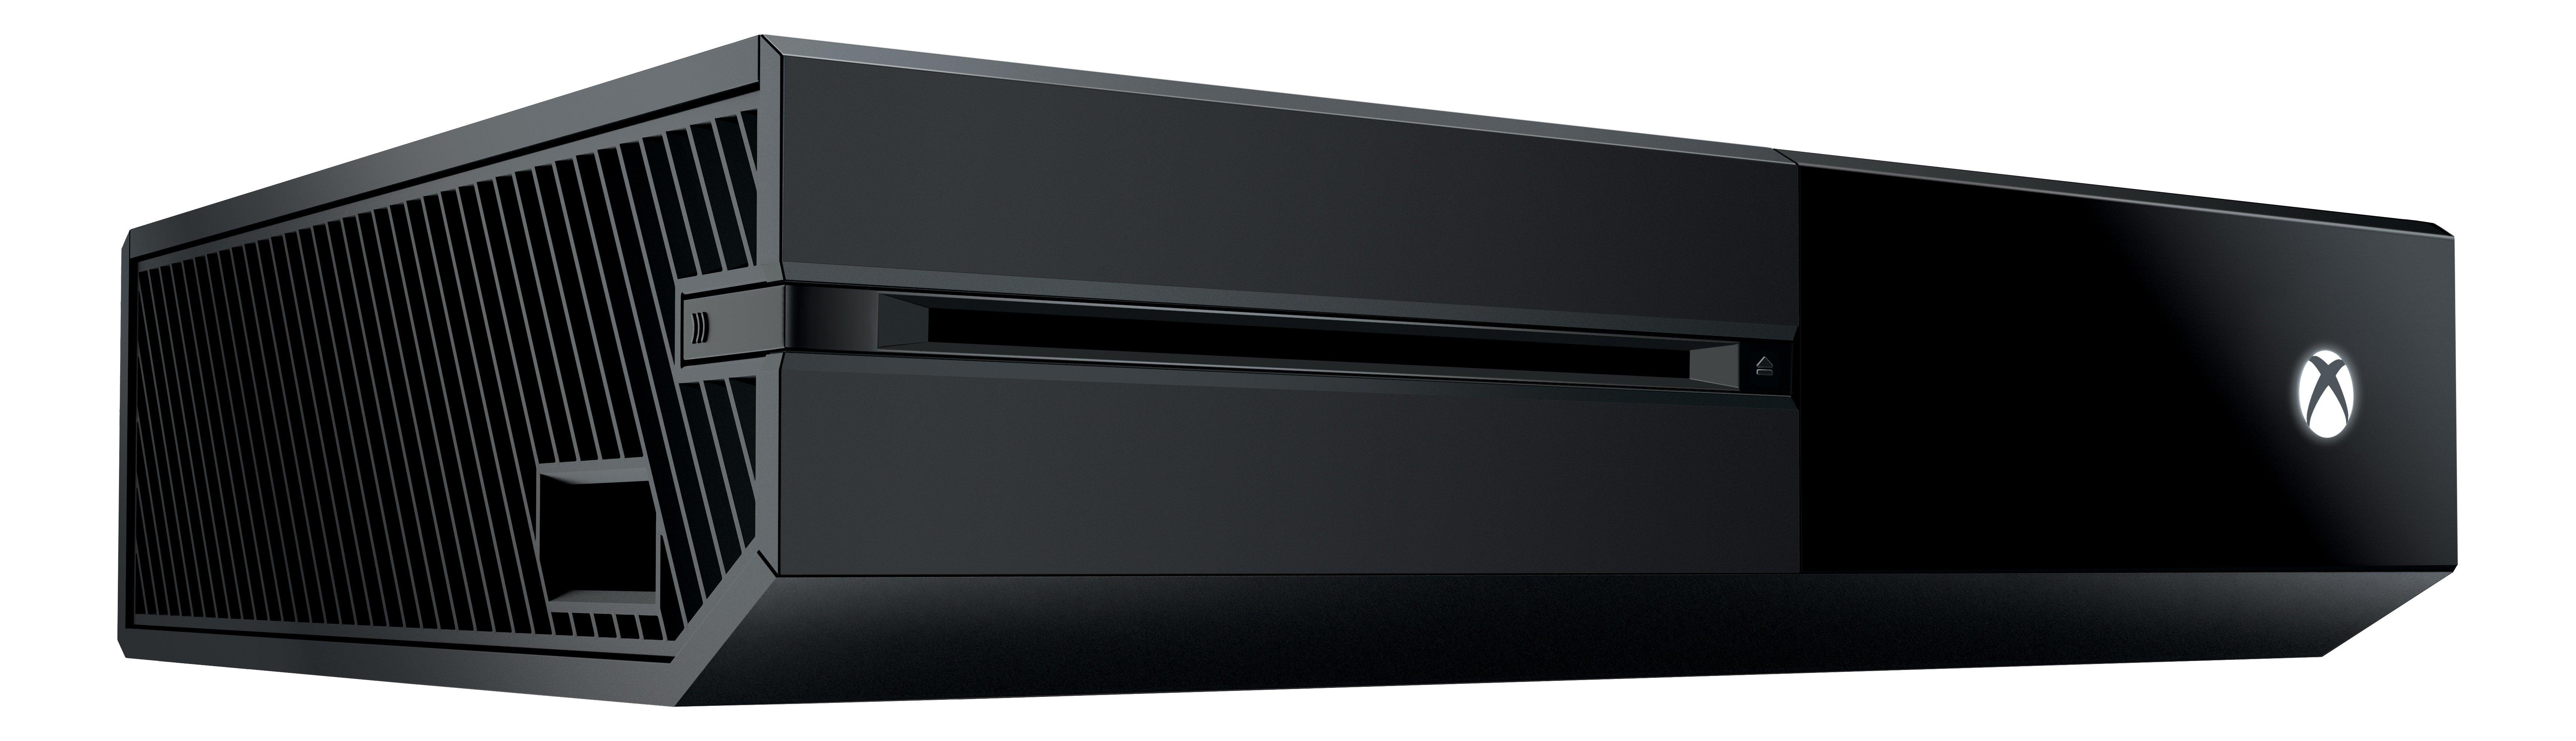 Microsoft Xbox One 500GB Console Black with Original Controller